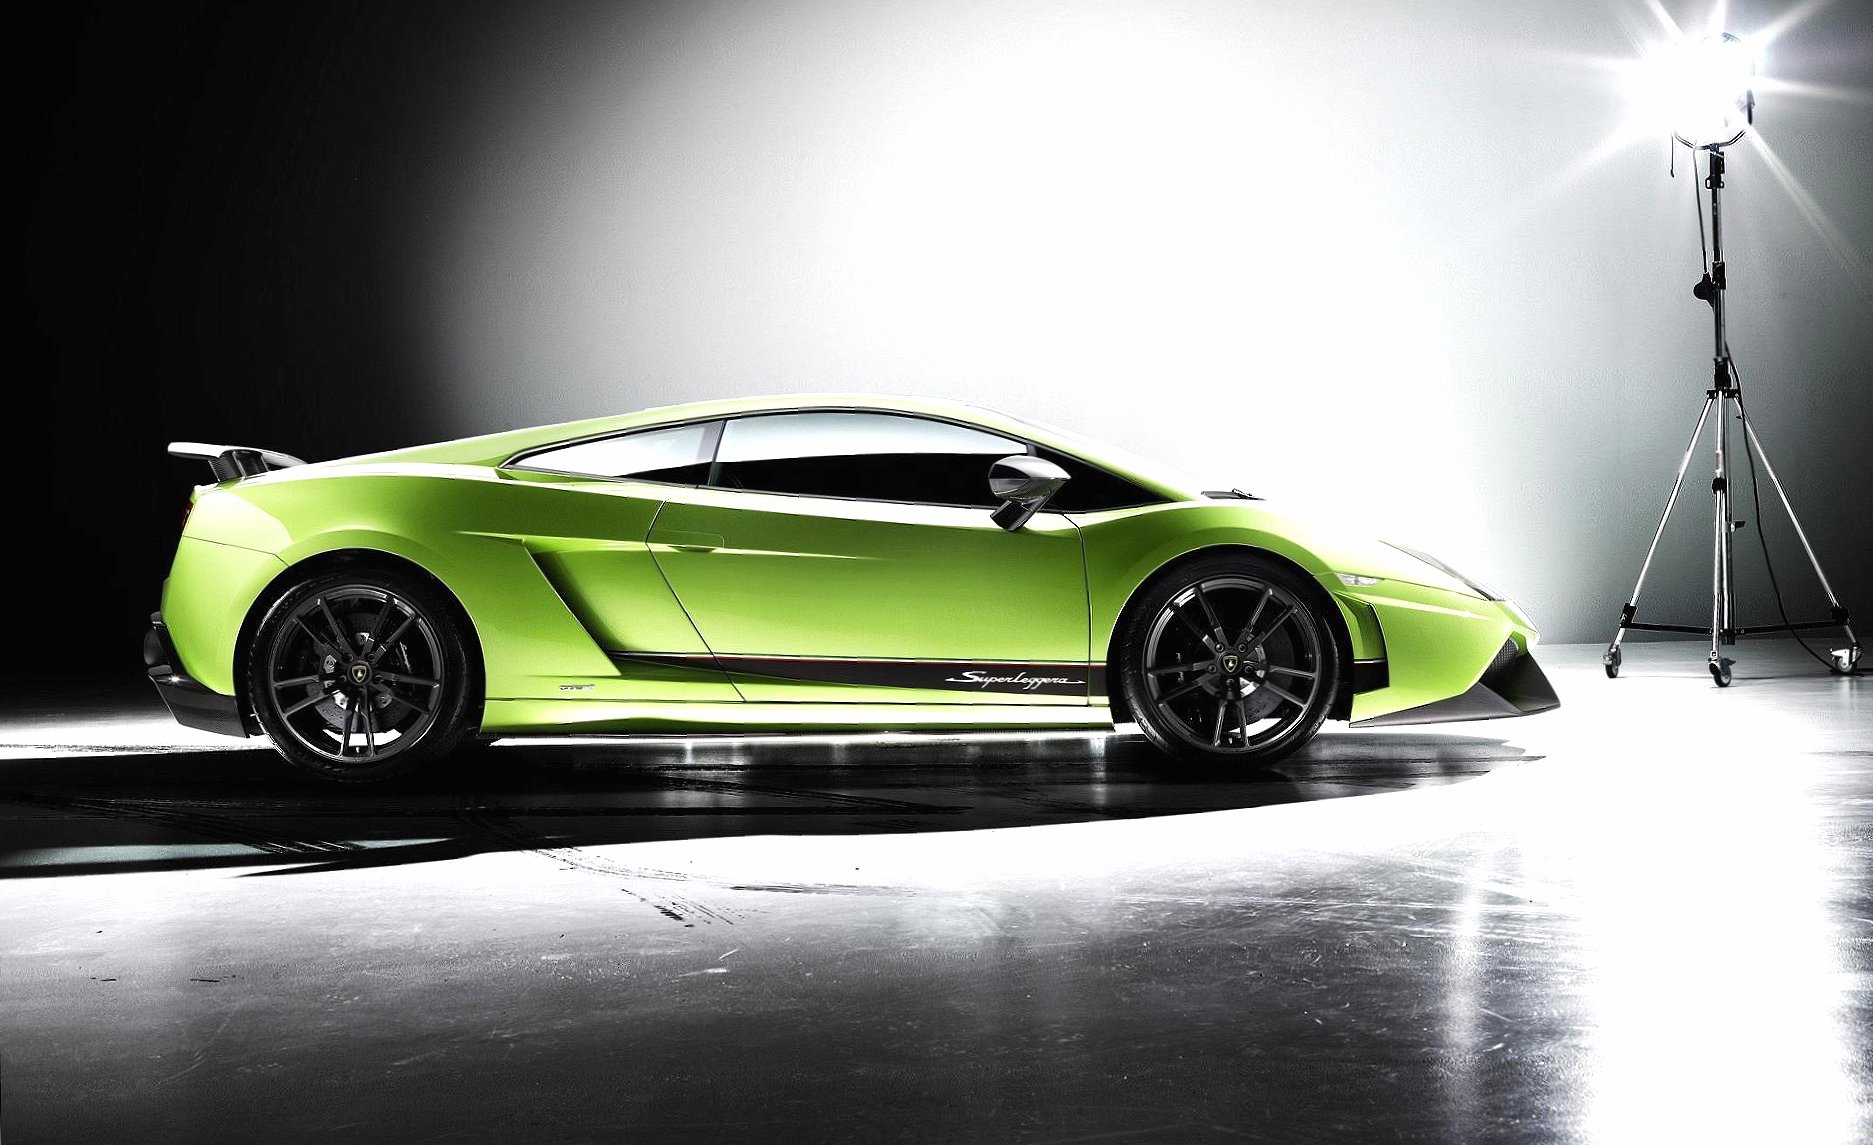 Lamborghini gallardo lp 570 4 superleggera at 1280 x 960 size wallpapers HD quality